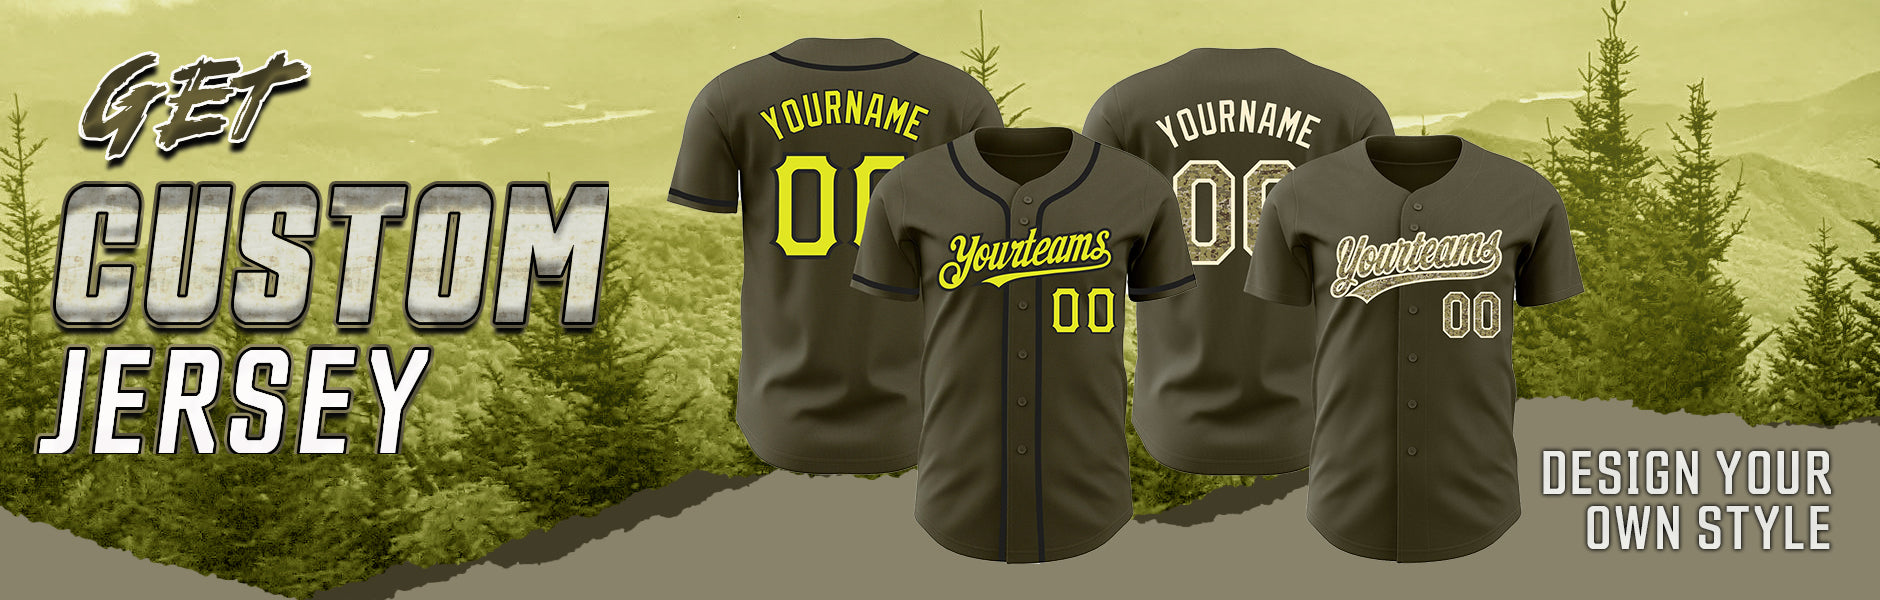 custom olive baseball jersey